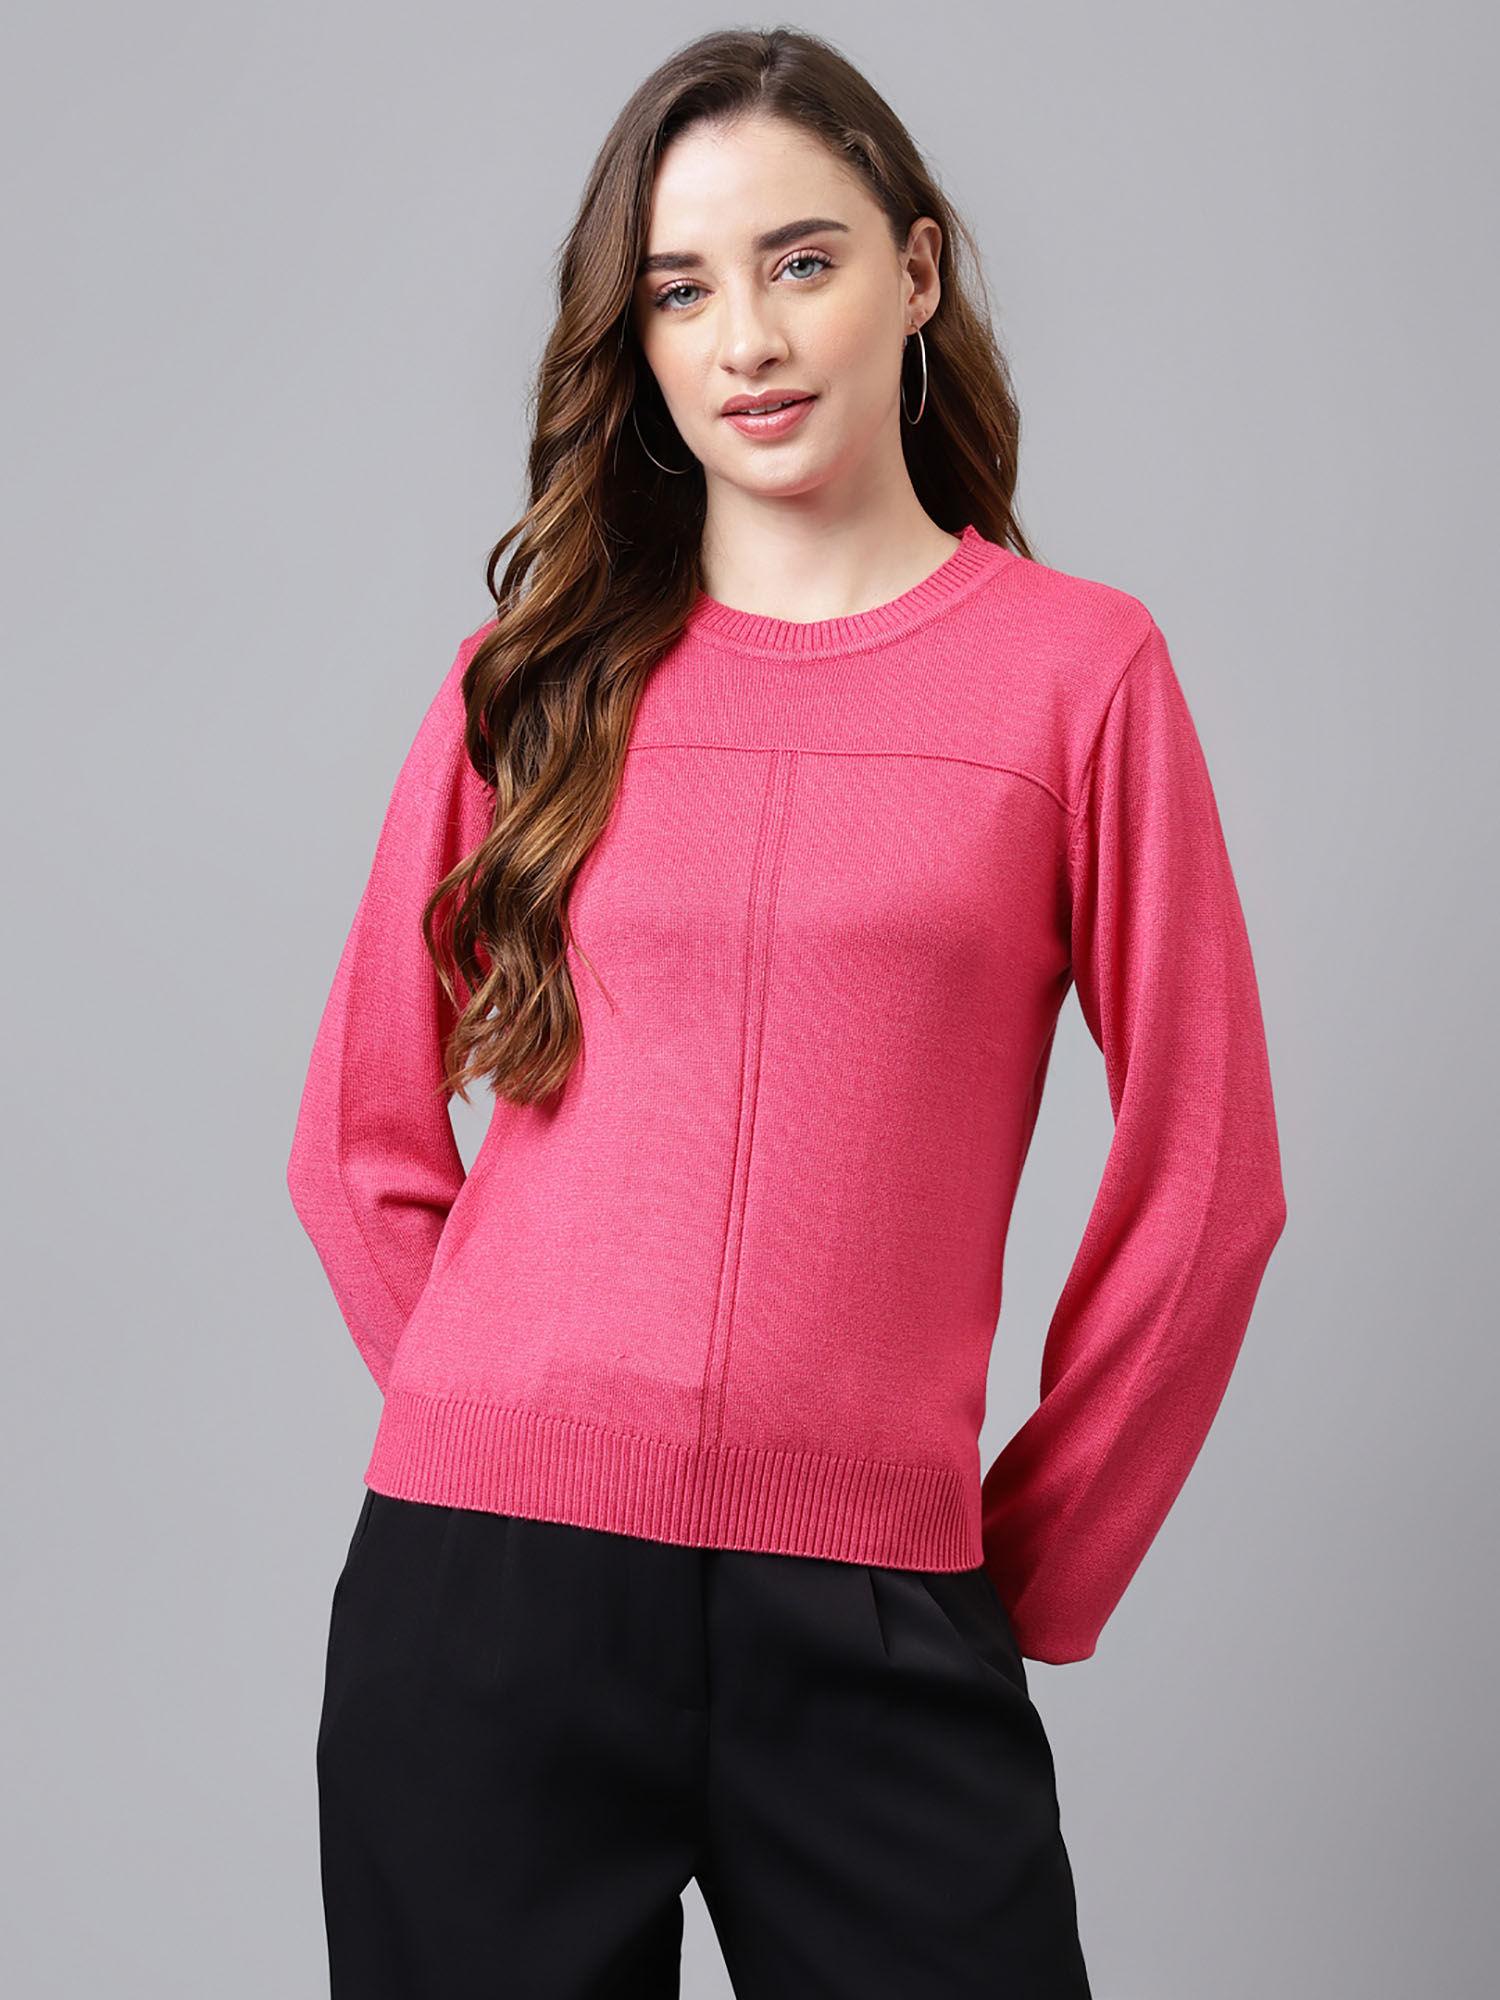 women full sleeve fuchsia color sweater